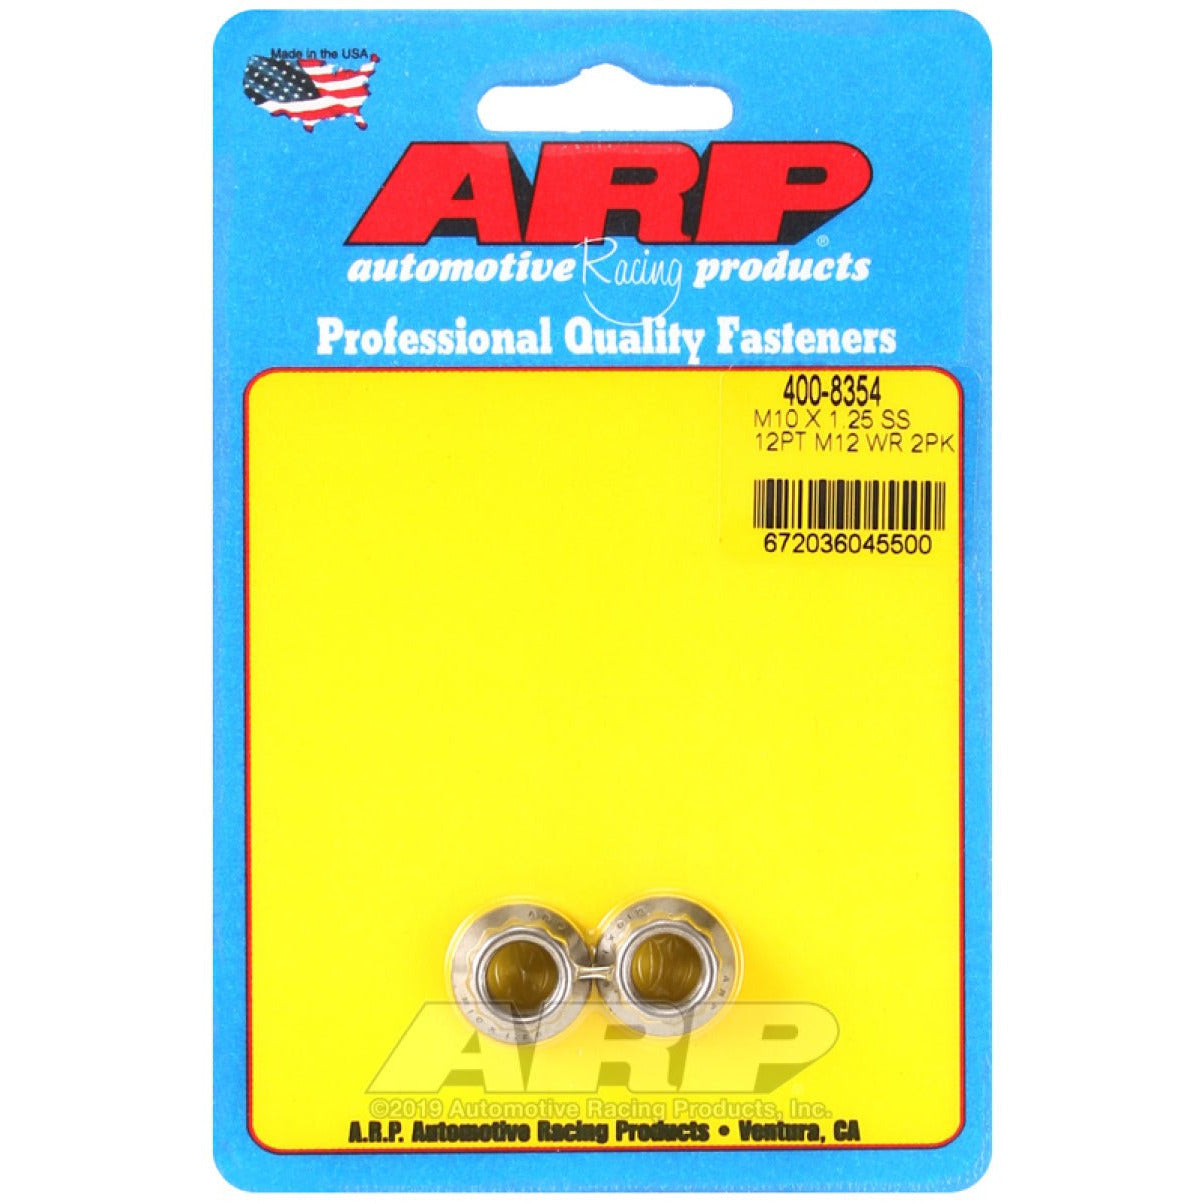 ARP M10 X 1.25 SS 12mm socket 12pt Nut Kit ARP Hardware Kits - Other